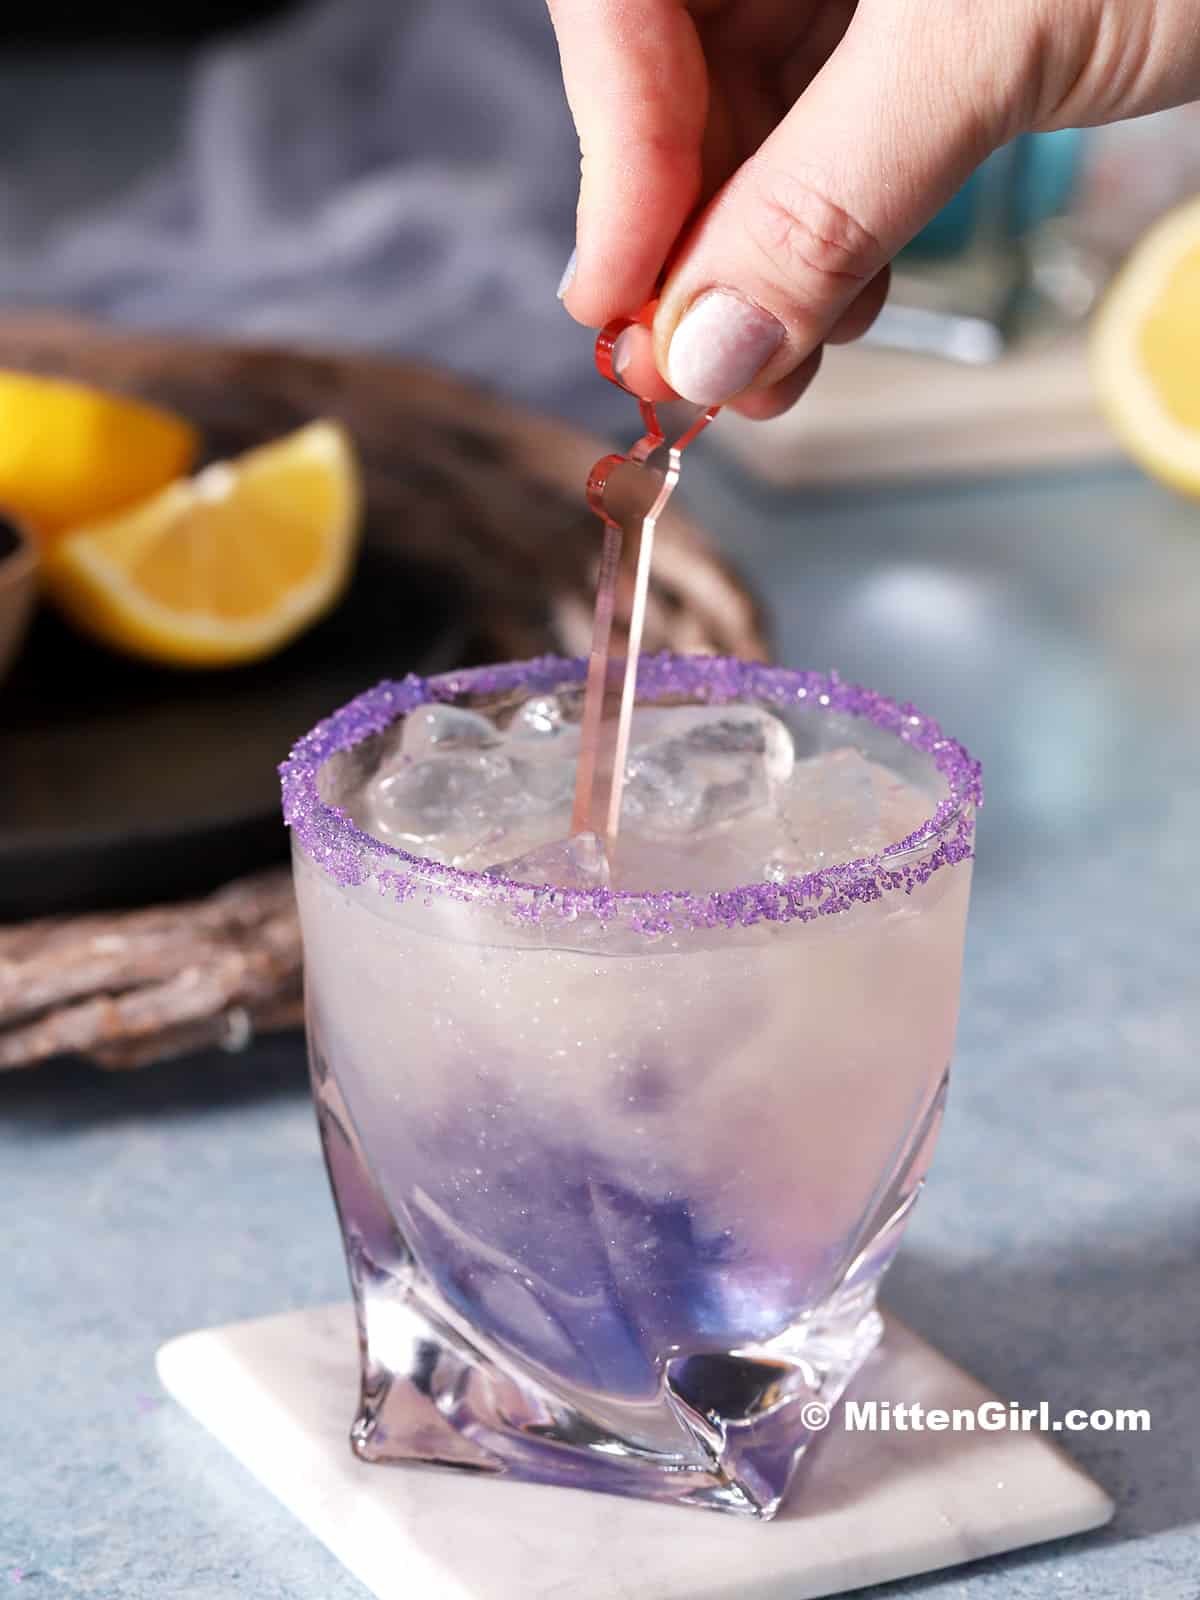 A hand stirring a glass of unicorn lemonade.